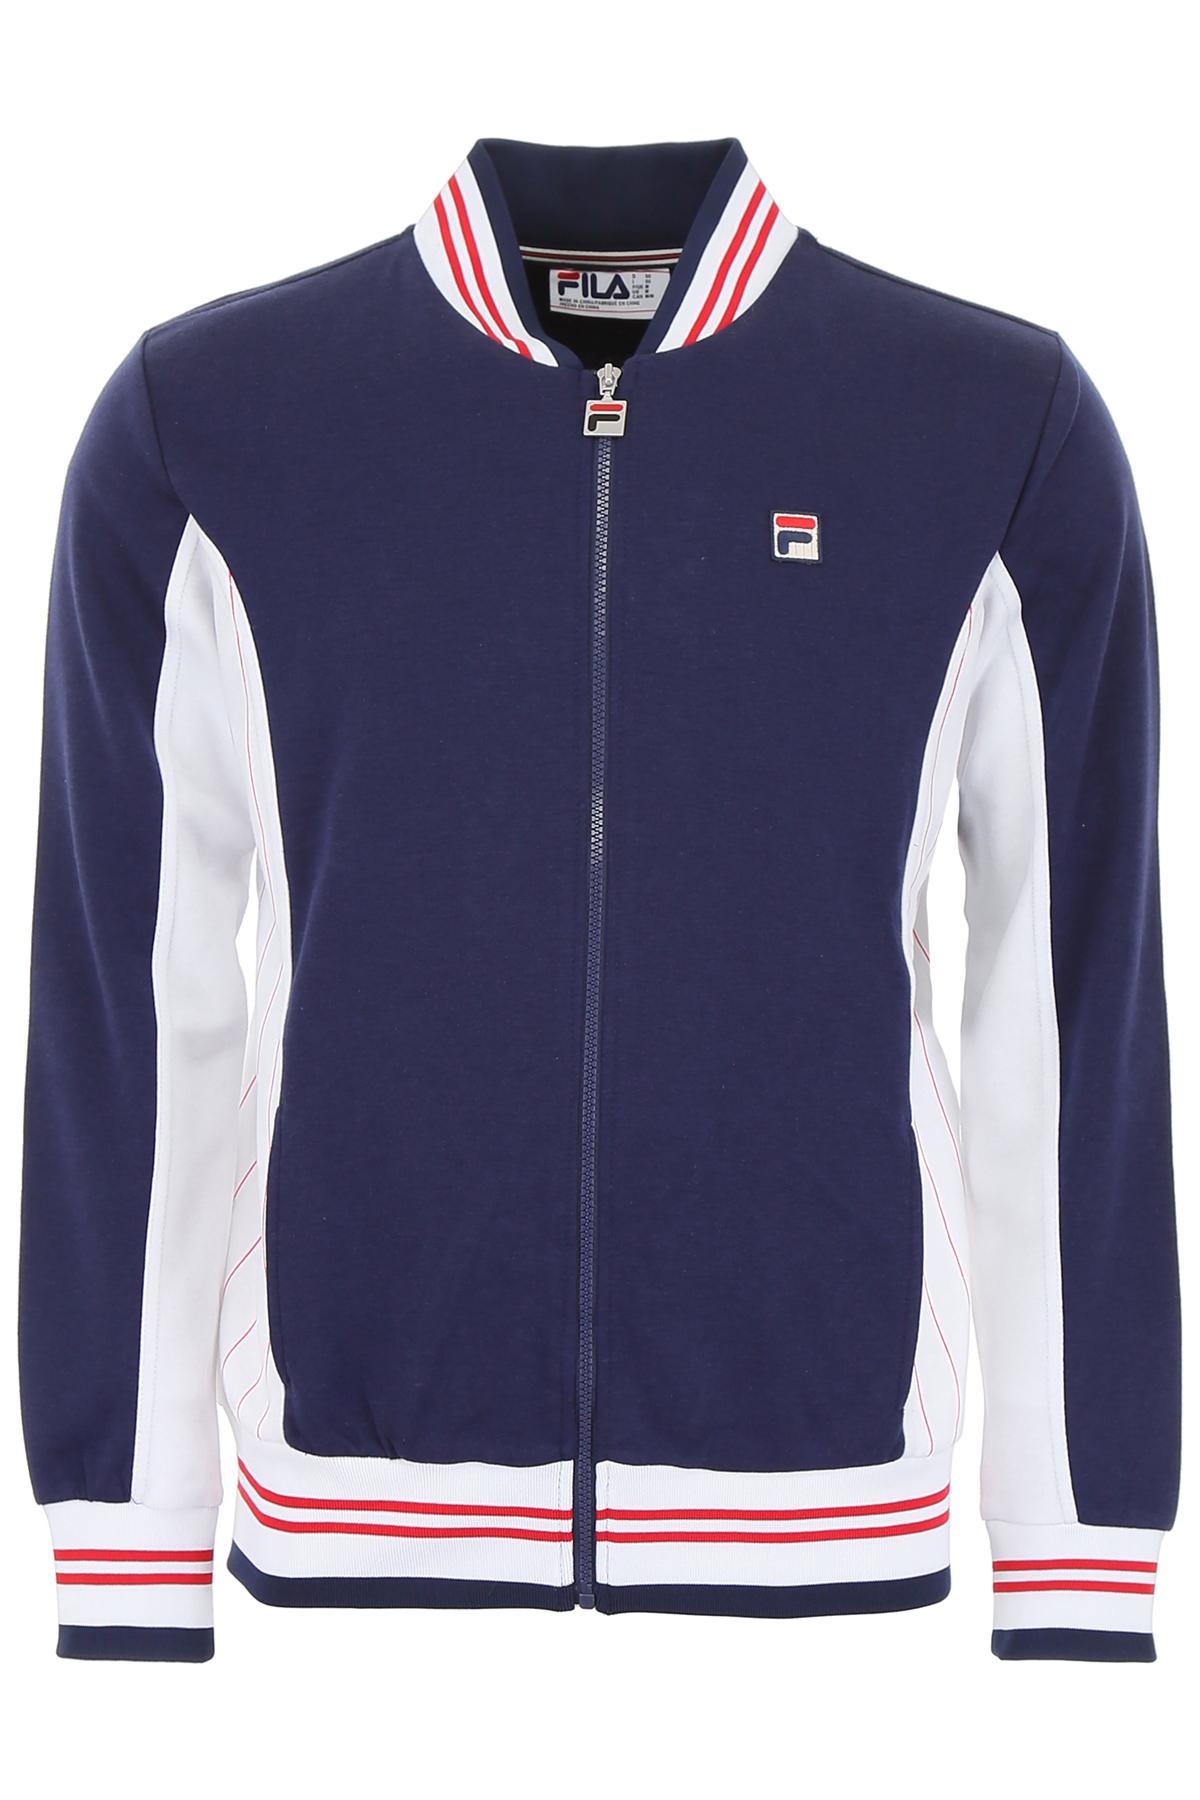 Fila Cotton Settanta Track Jacket in Blue,White,Red (Blue) for Men - Lyst